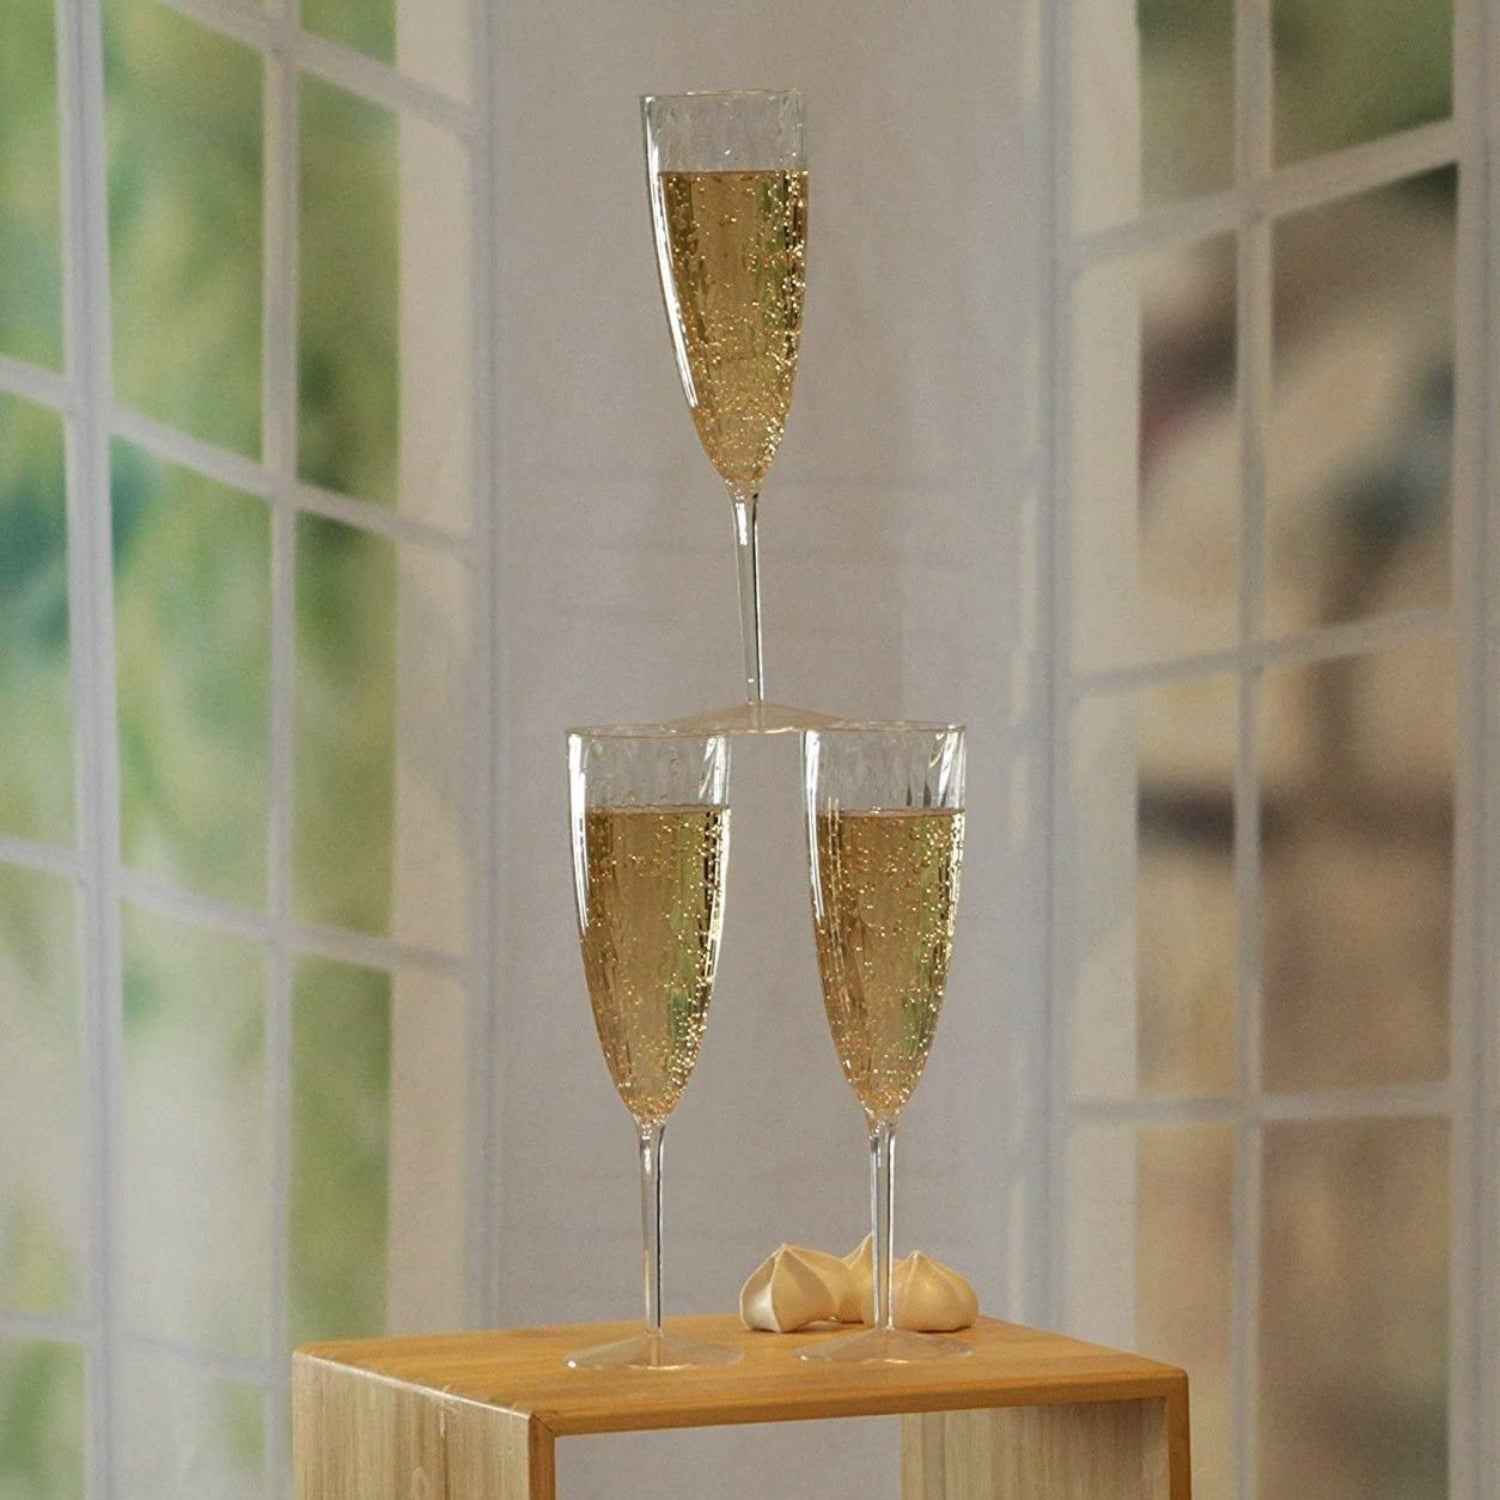 Lillian Tablesettings Elegant Plastic Champagne Flutes Clear 6 oz Cups Lillian   